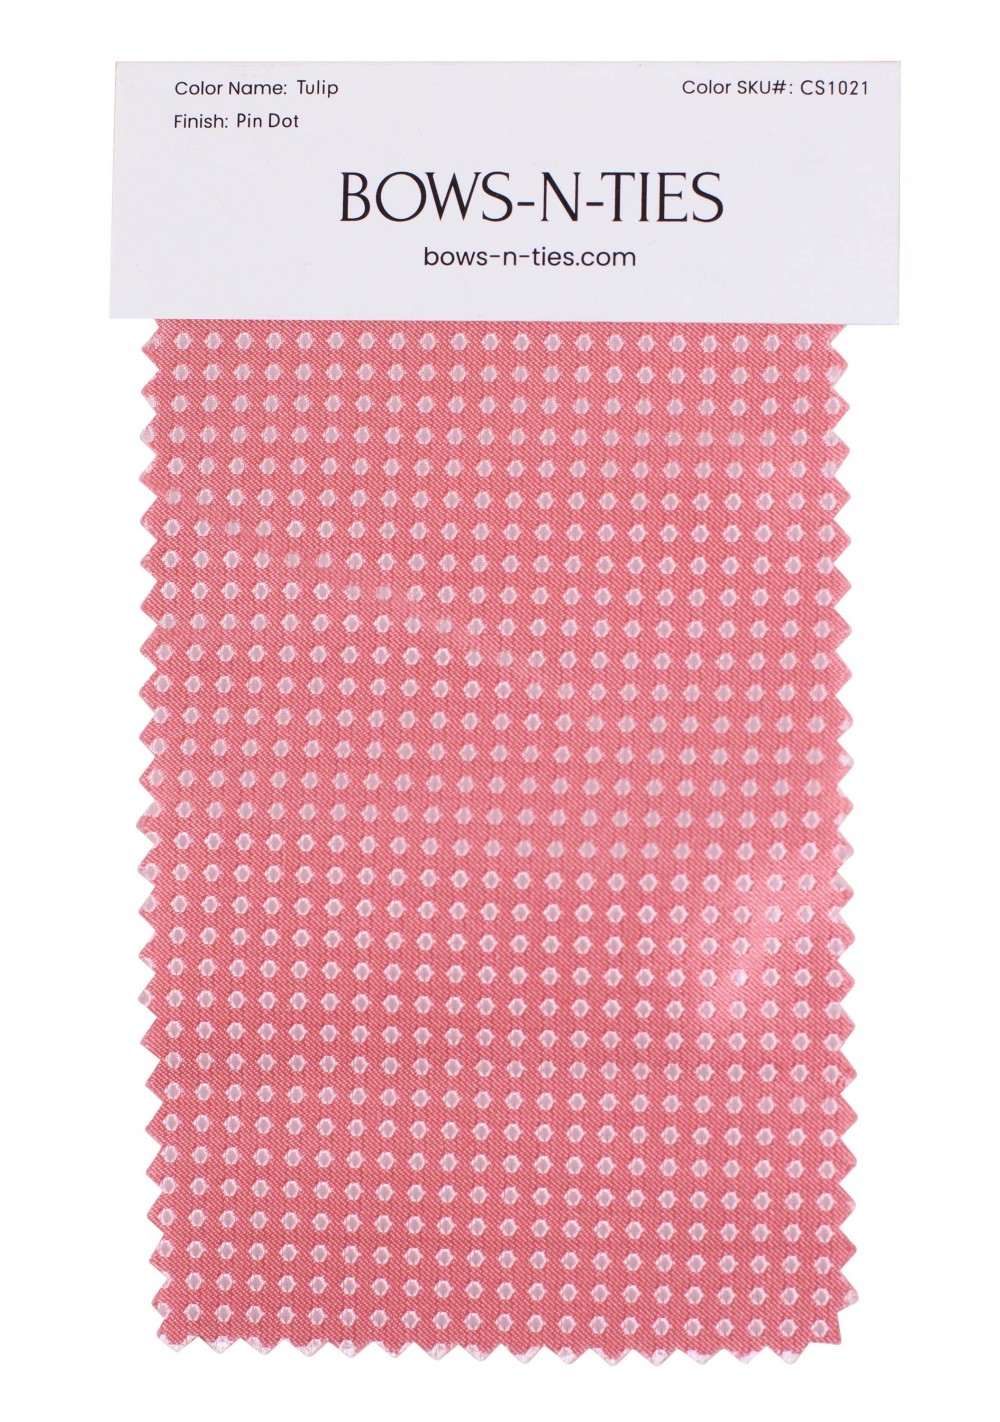 Pin Dot Fabric Swatch - Tulip